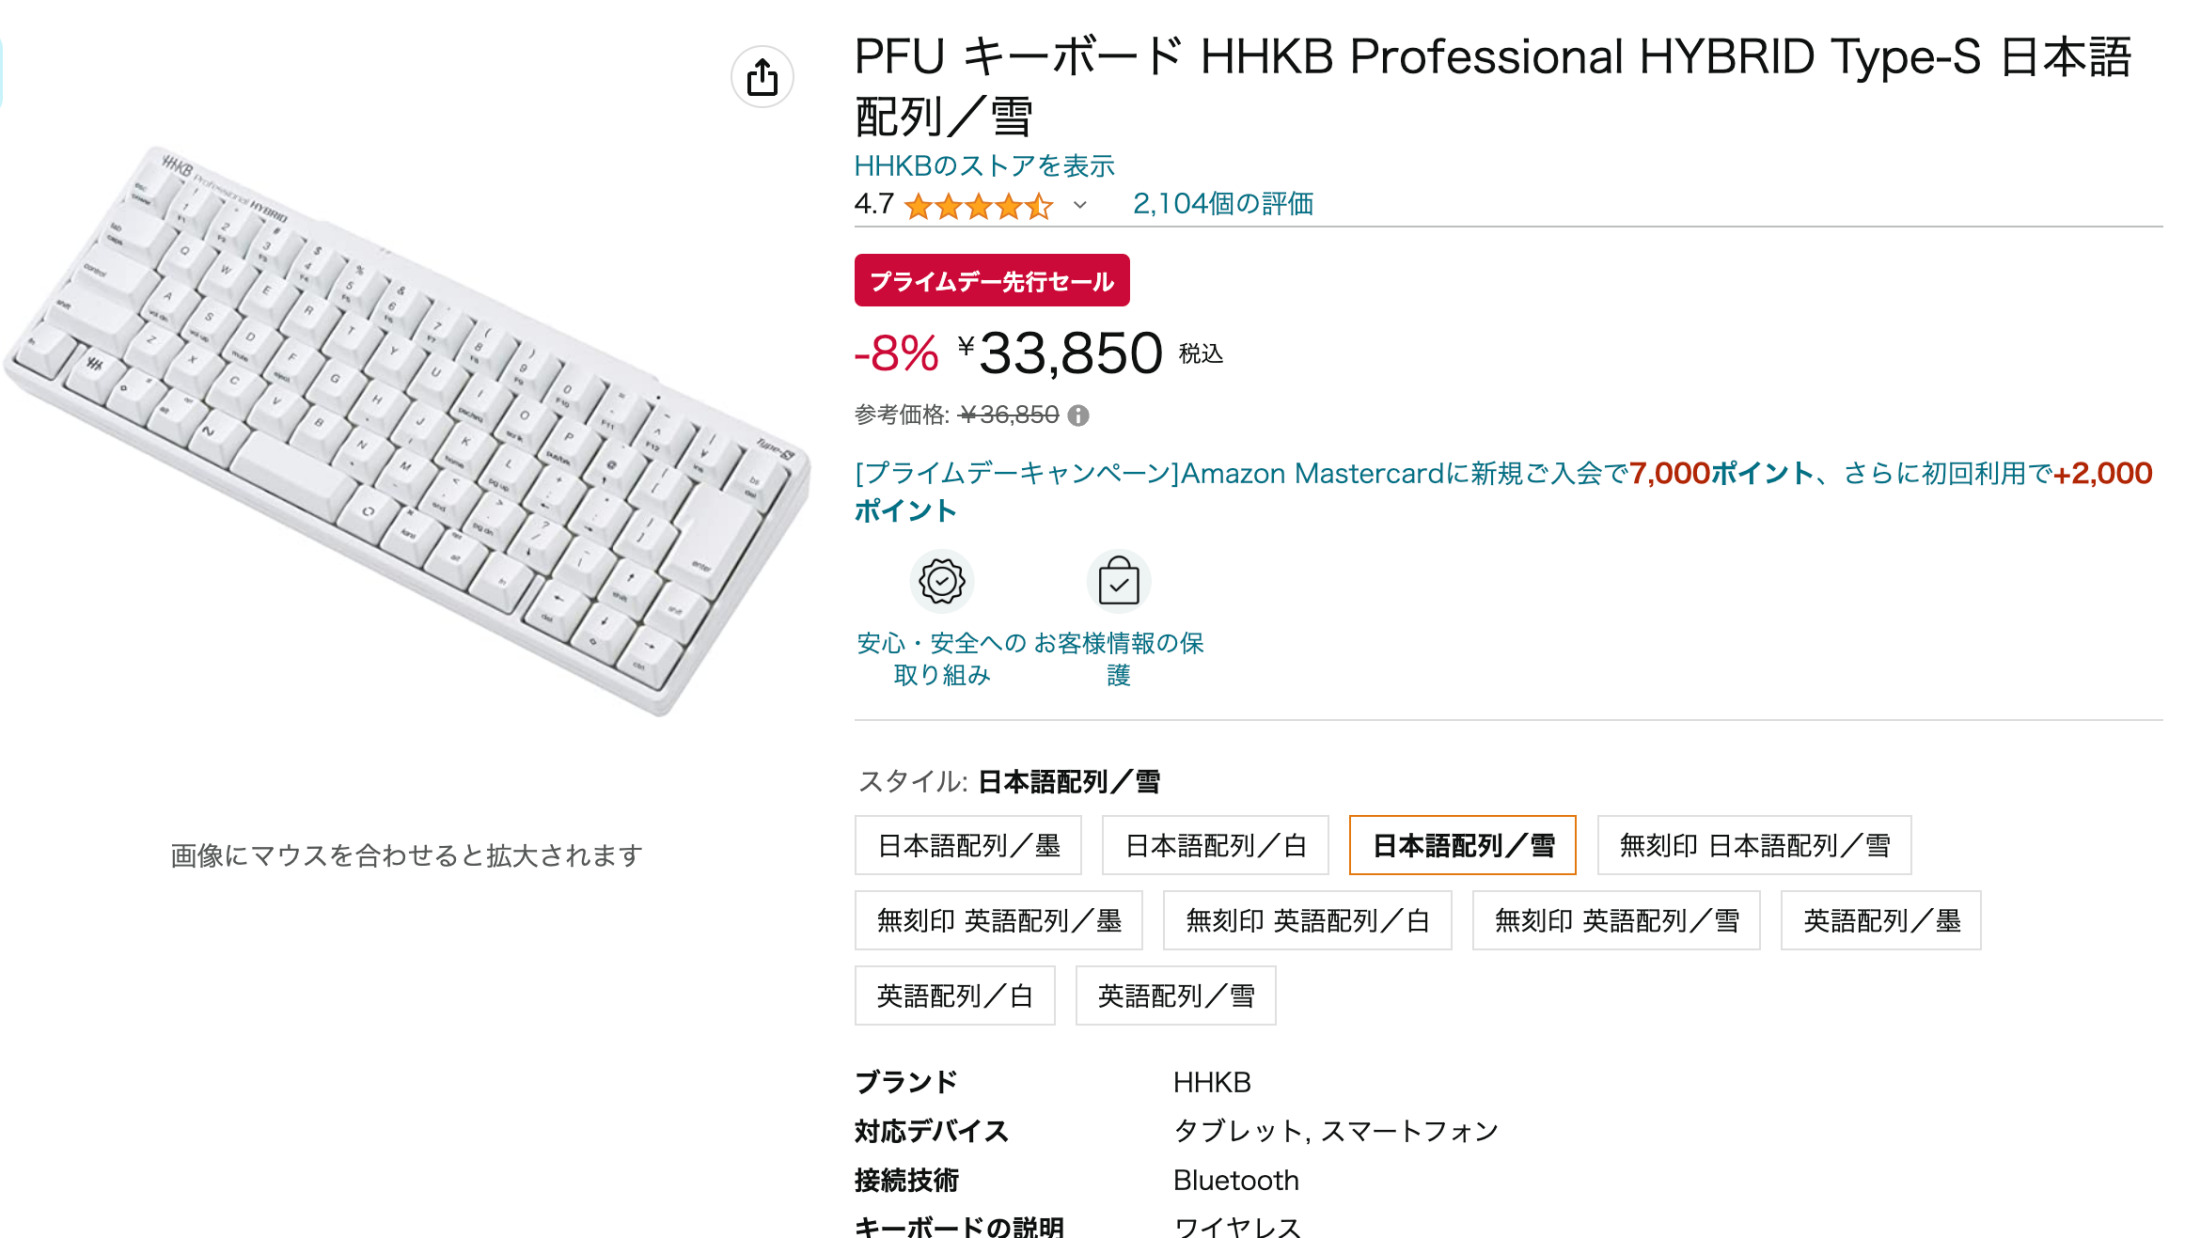 PFU HHKB Professional HYBRID Type-S 